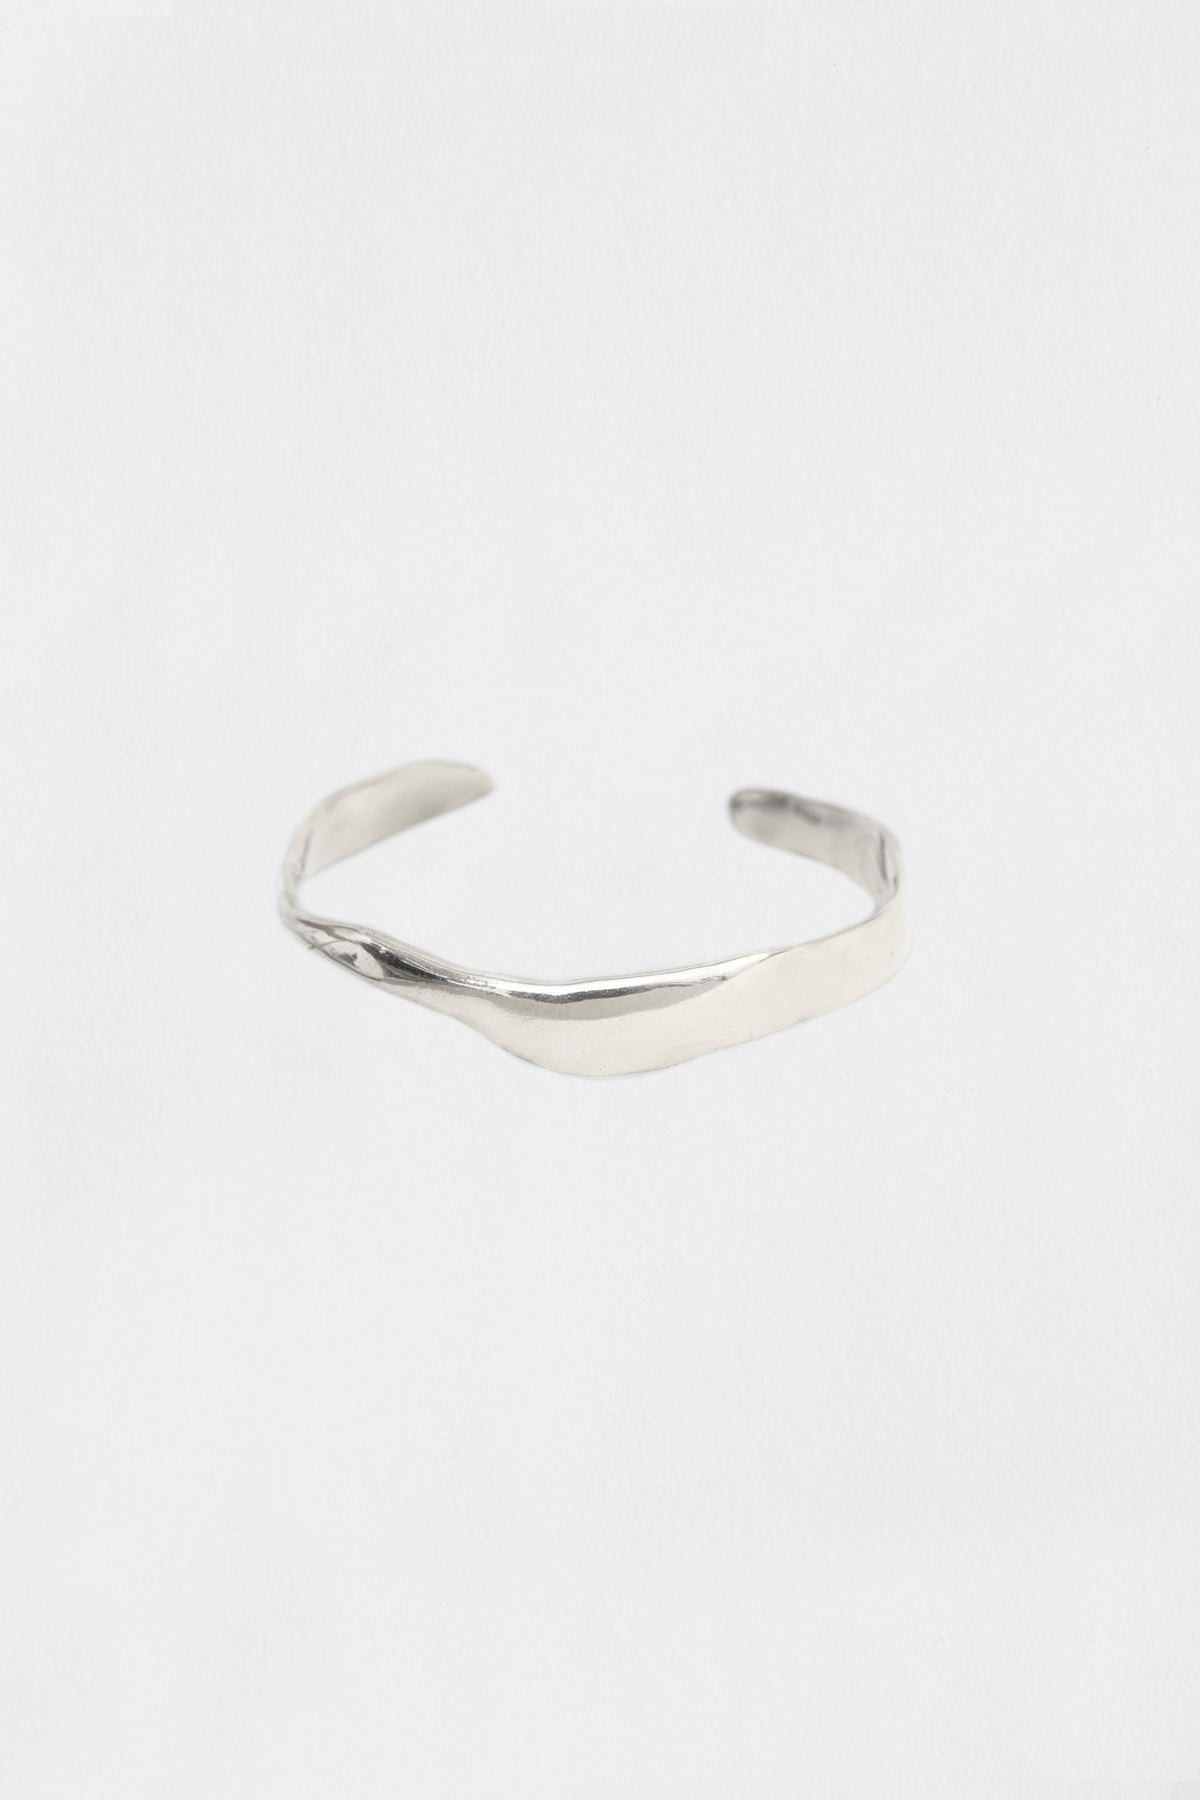 melted cuff bracelet – Hernan Herdez